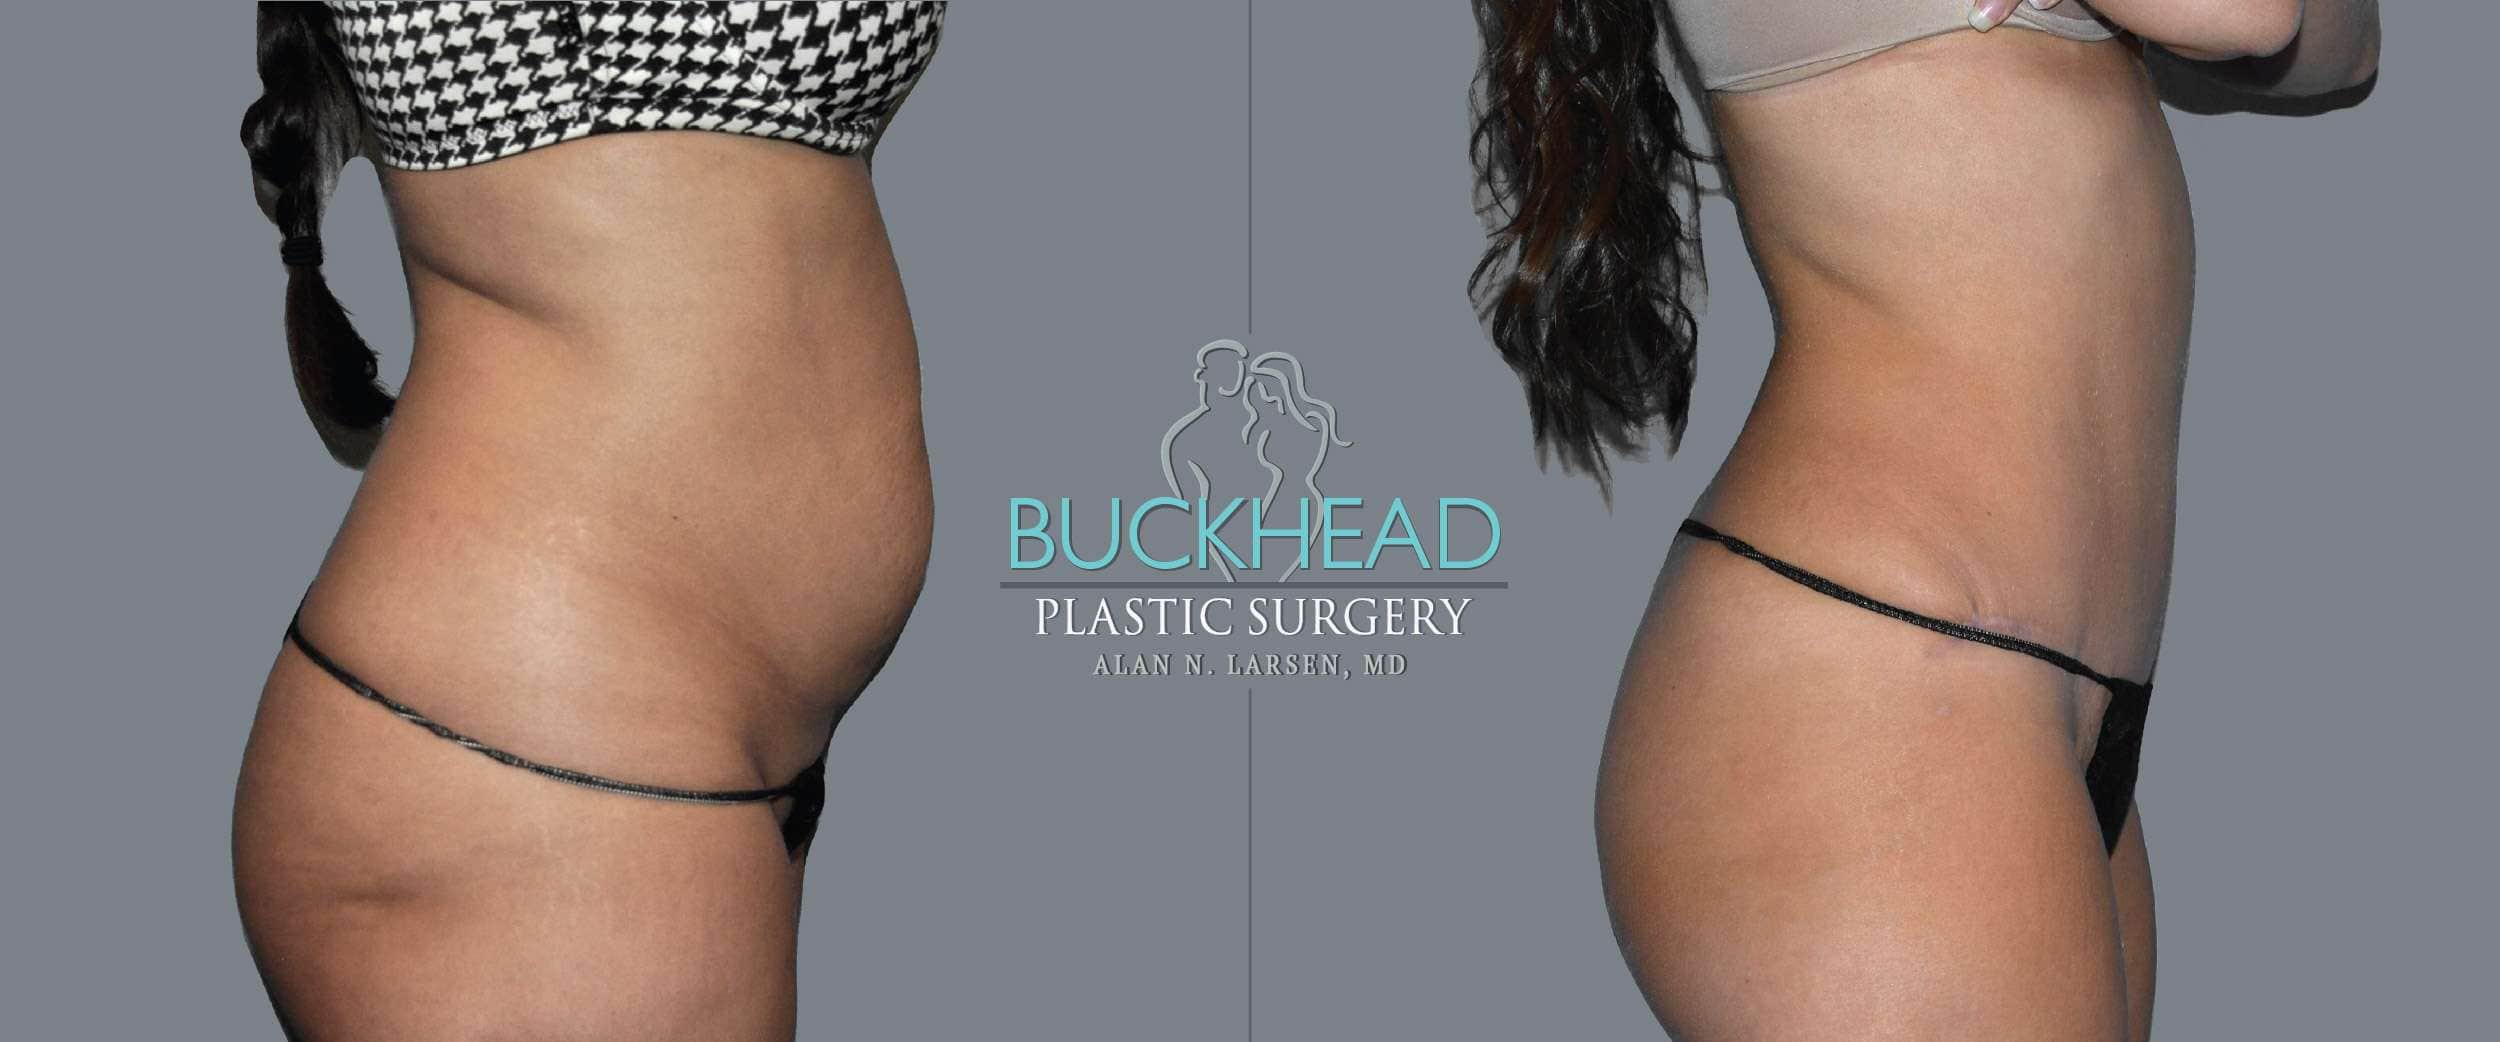 Before and After Photo Gallery | Liposuction - Hips & Flanks | Buckhead Plastic Surgery | Alan N. Larsen, MD | Board-Certified Plastic Surgeon | Atlanta GA